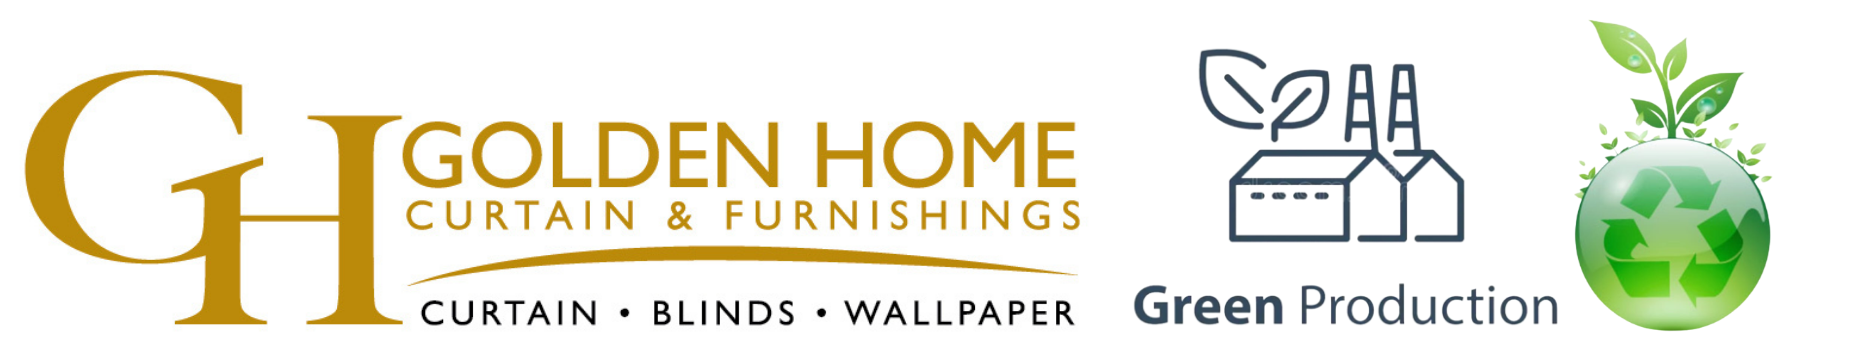 Golden Home Curtain & Furnishings